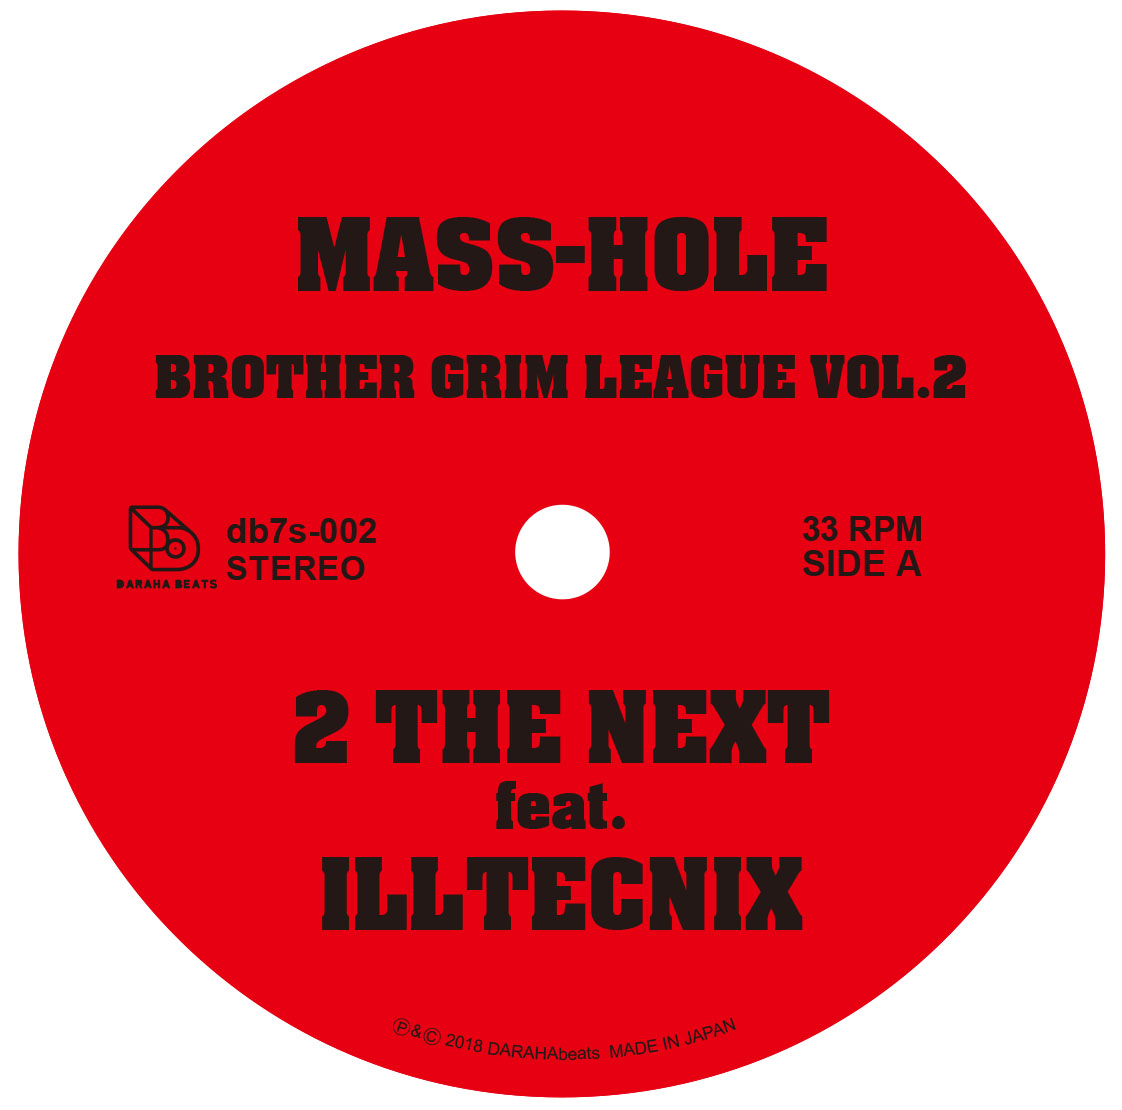 MASS-HOLE / DJ GQ / BROTHER GRIM LEAGUE VOL.2 7"